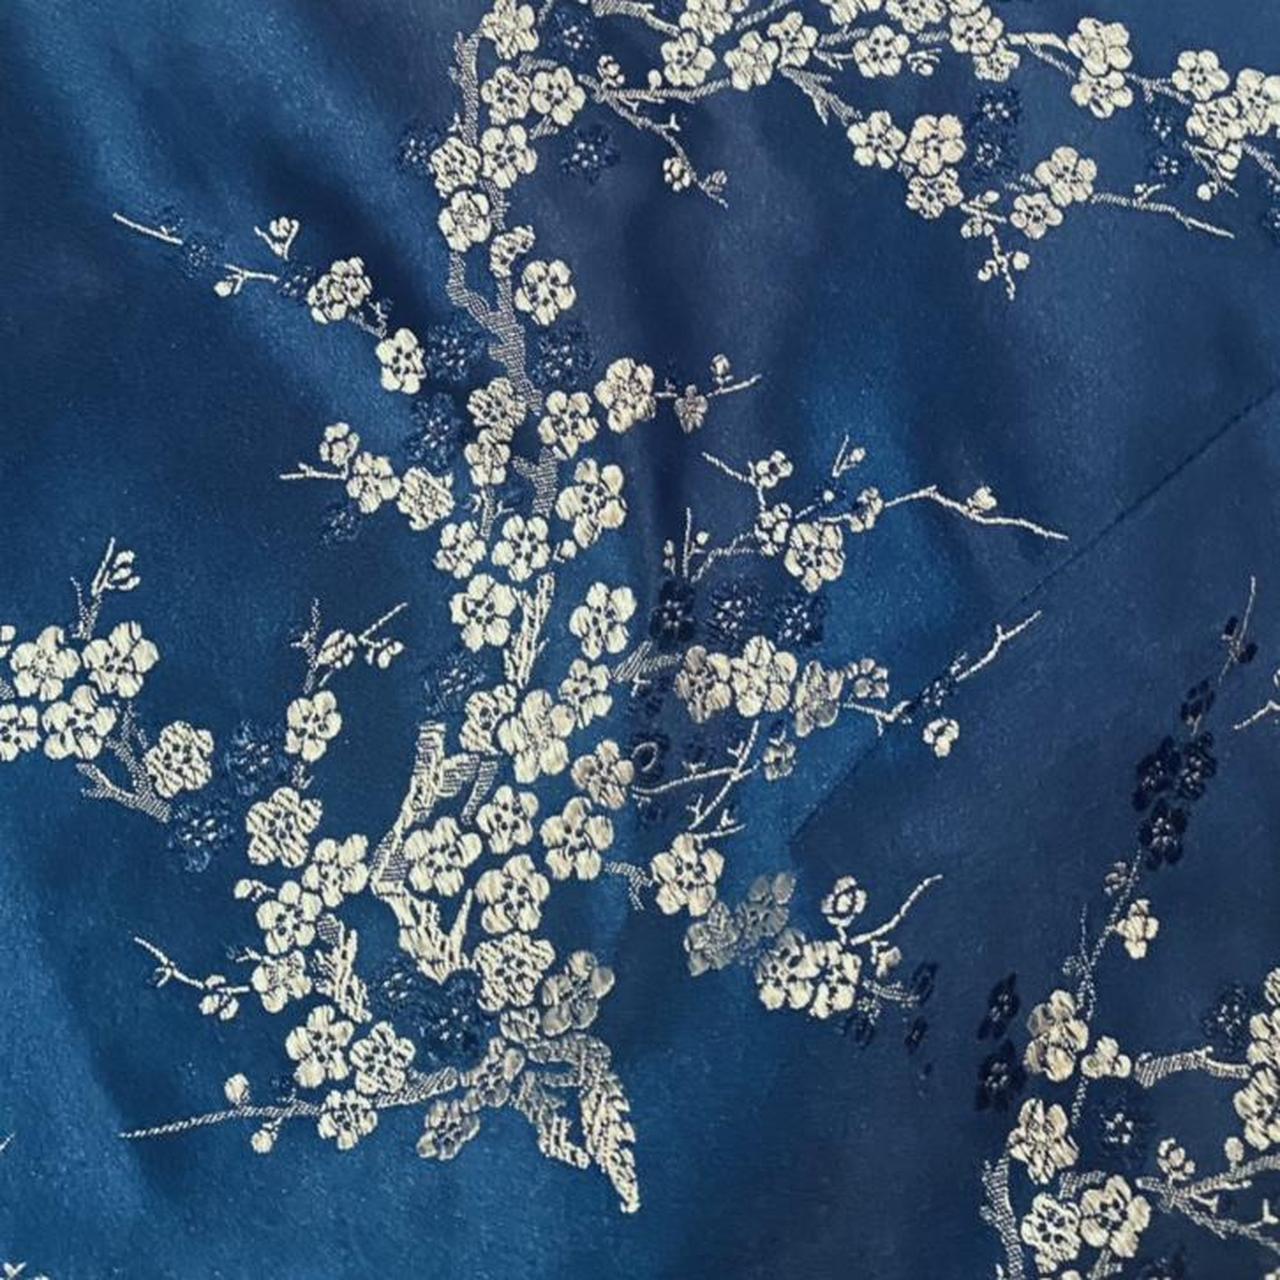 Product Image 3 - Vintage Chinese Cheongsam Dress:
(Short)
Dark Blue